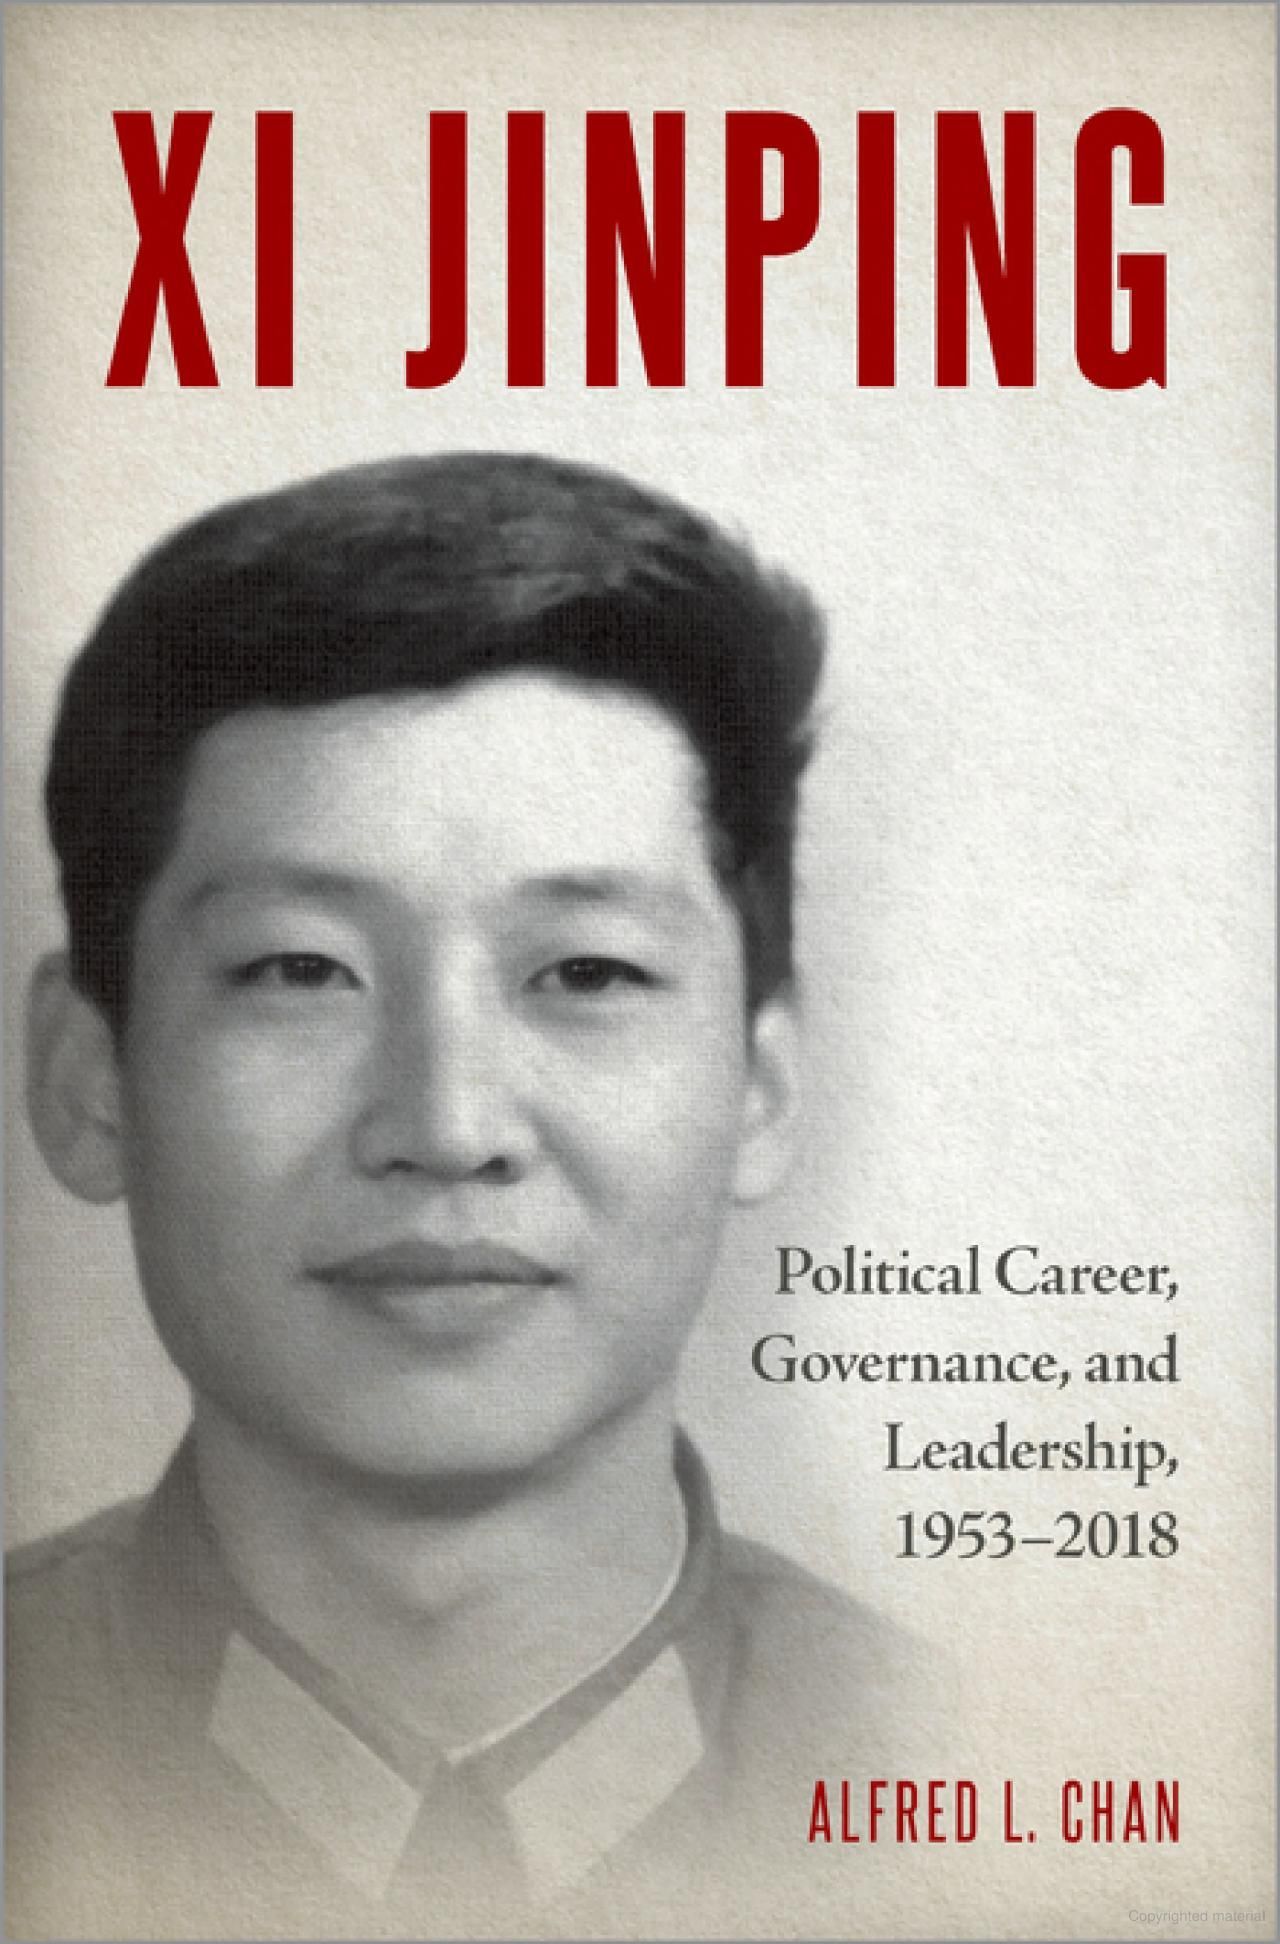 The Masks of Xi Jinping: On Alfred L. Chan’s “Xi Jinping” and Joseph Torigian’s “Prestige, Manipulation, and Coercion”